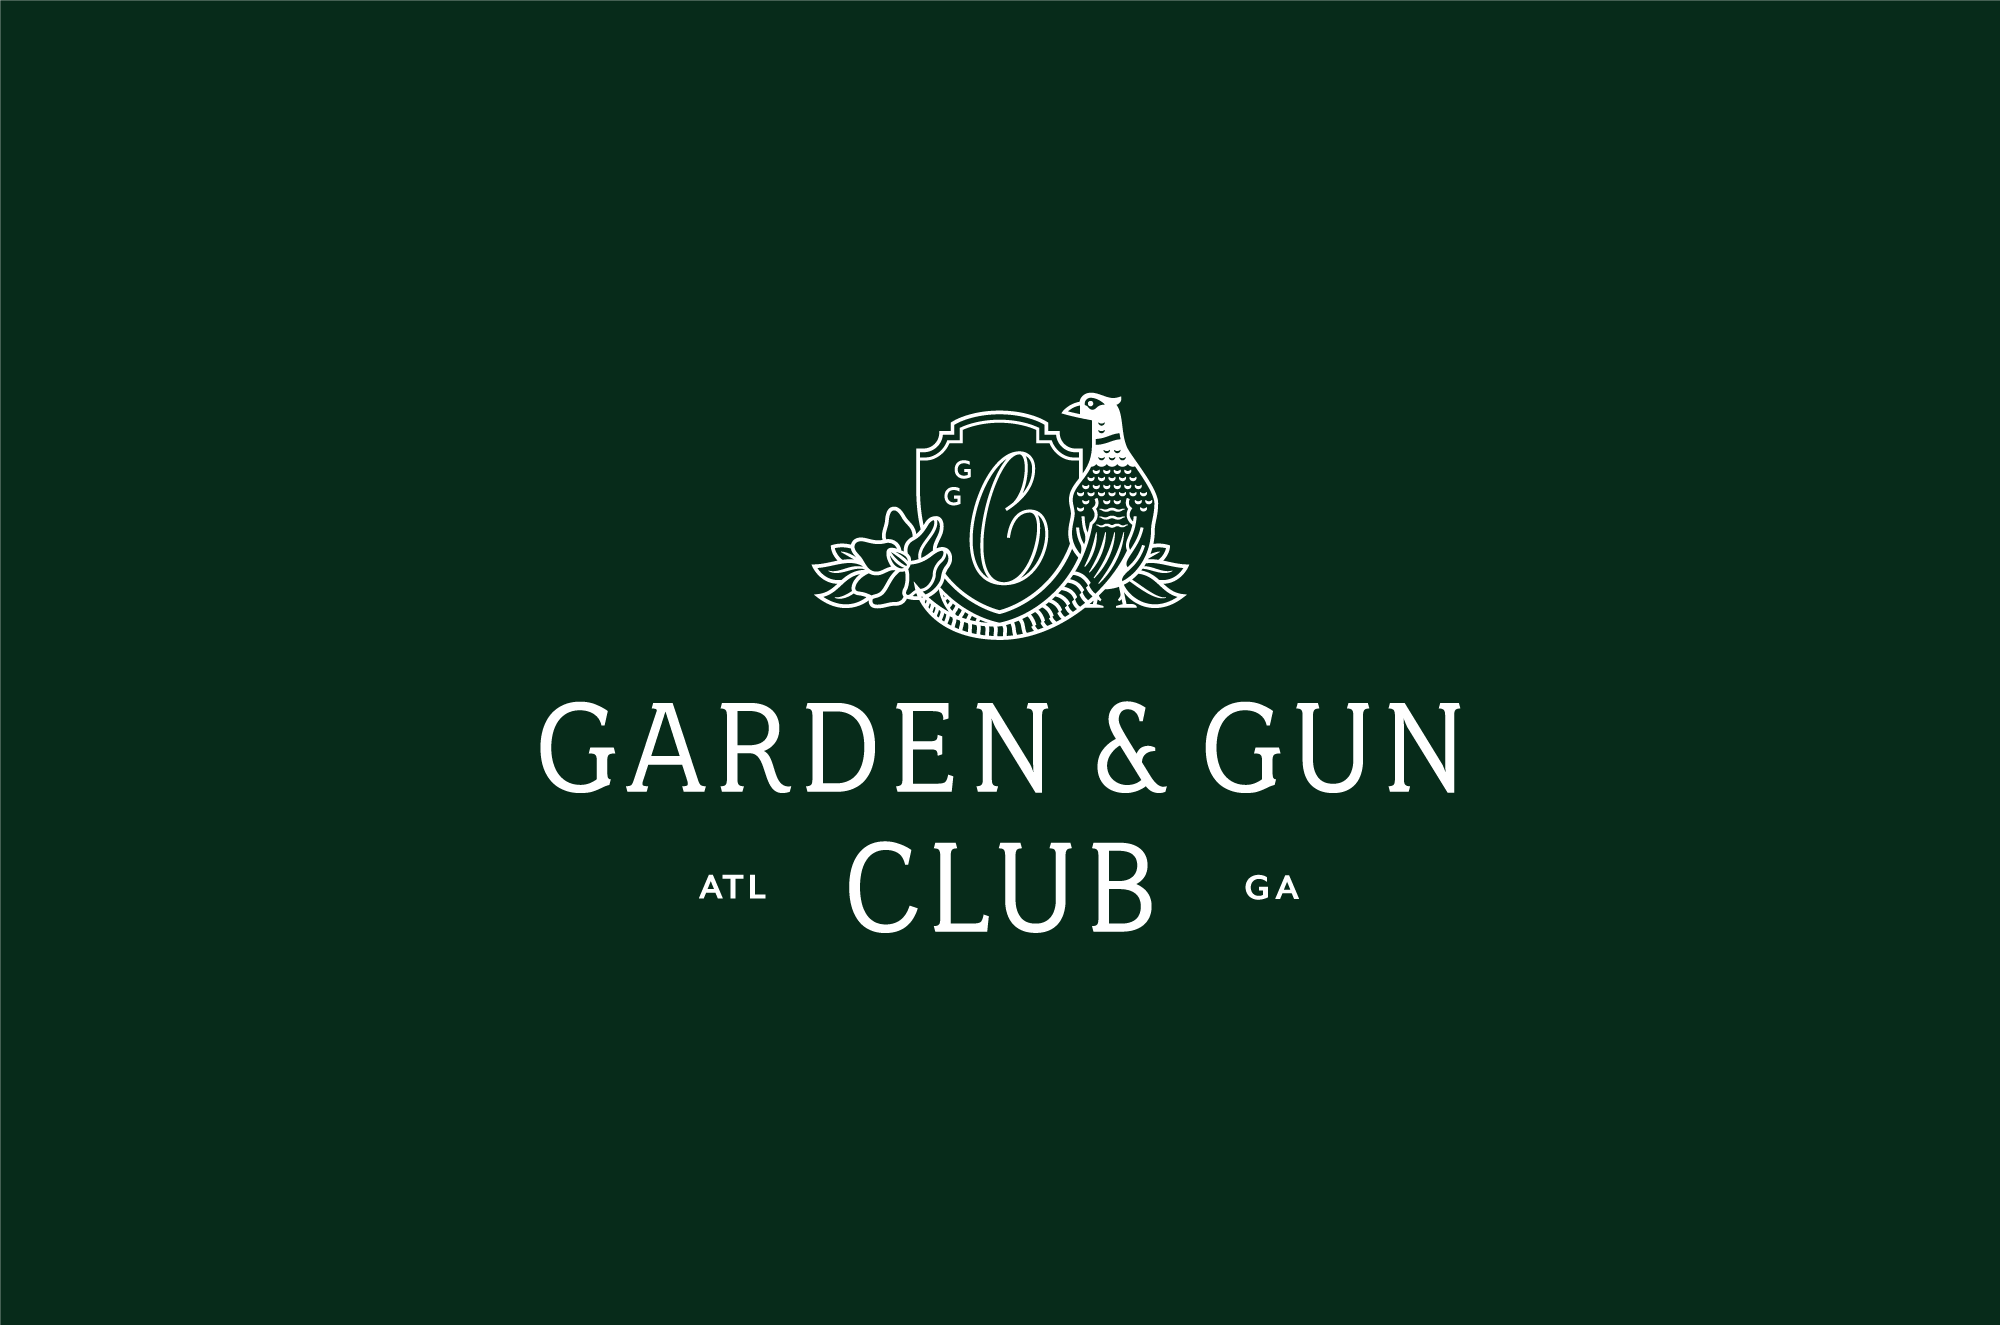 Studio Carnley - Garden & Gun Club: Restaurant Branding Case Study